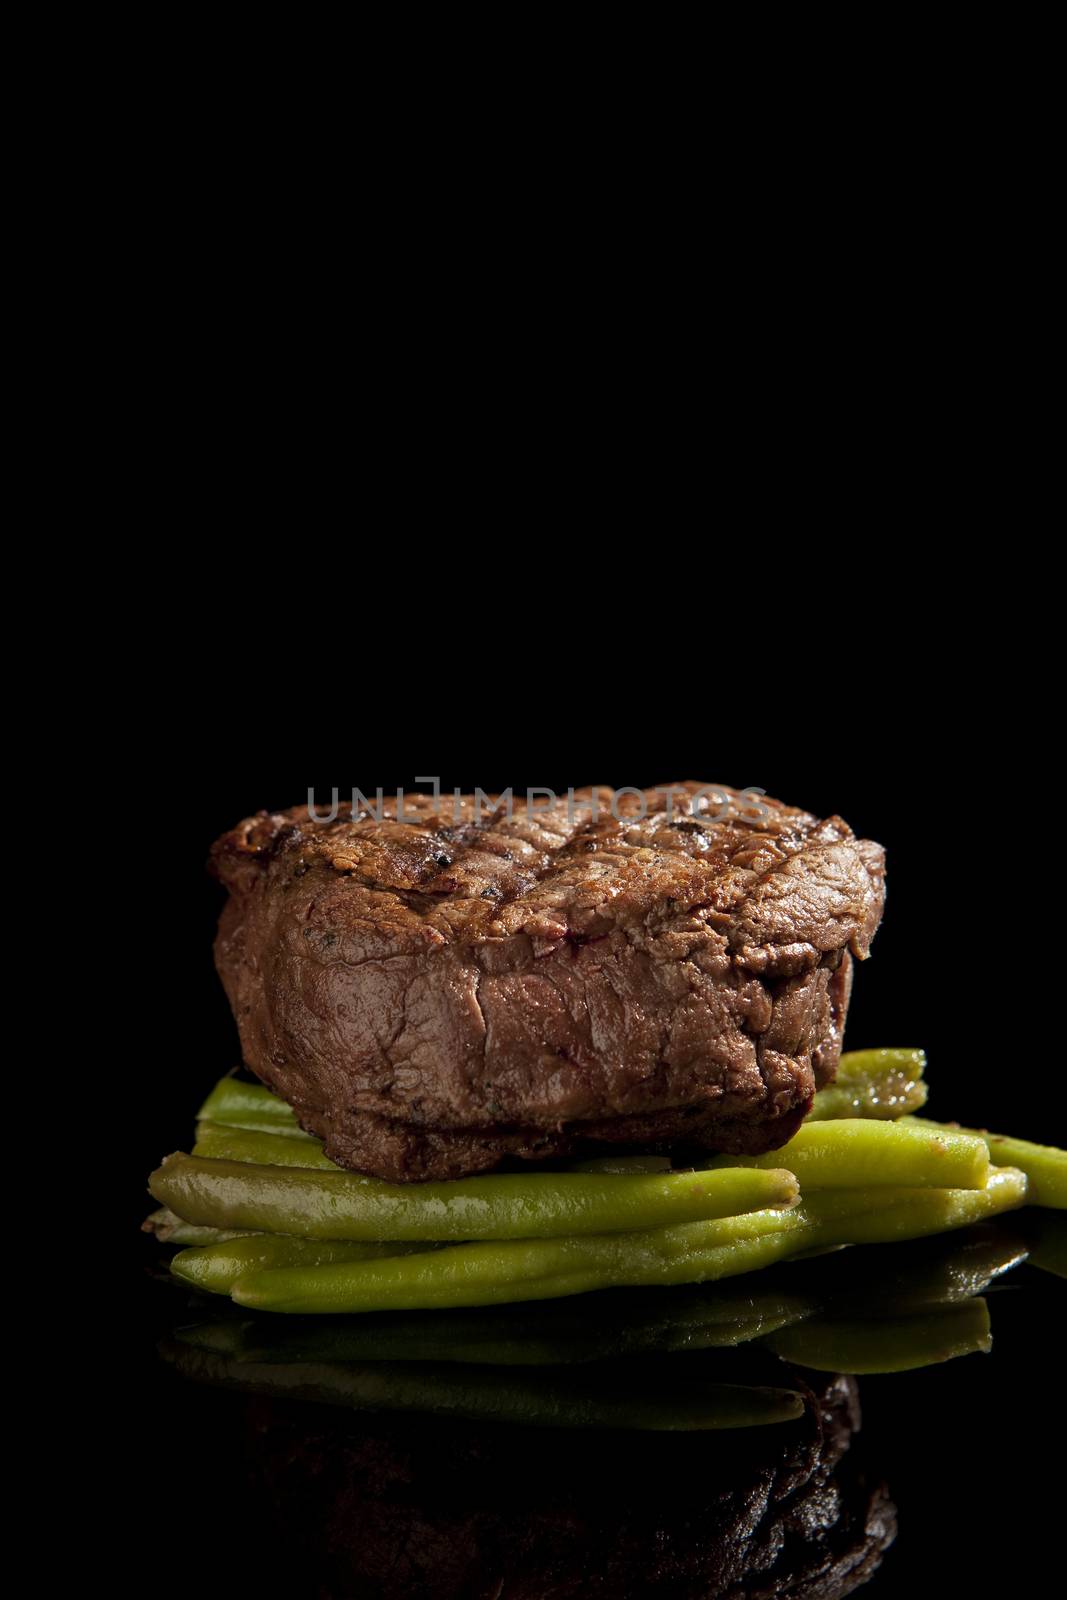 delicious beef steak on black background